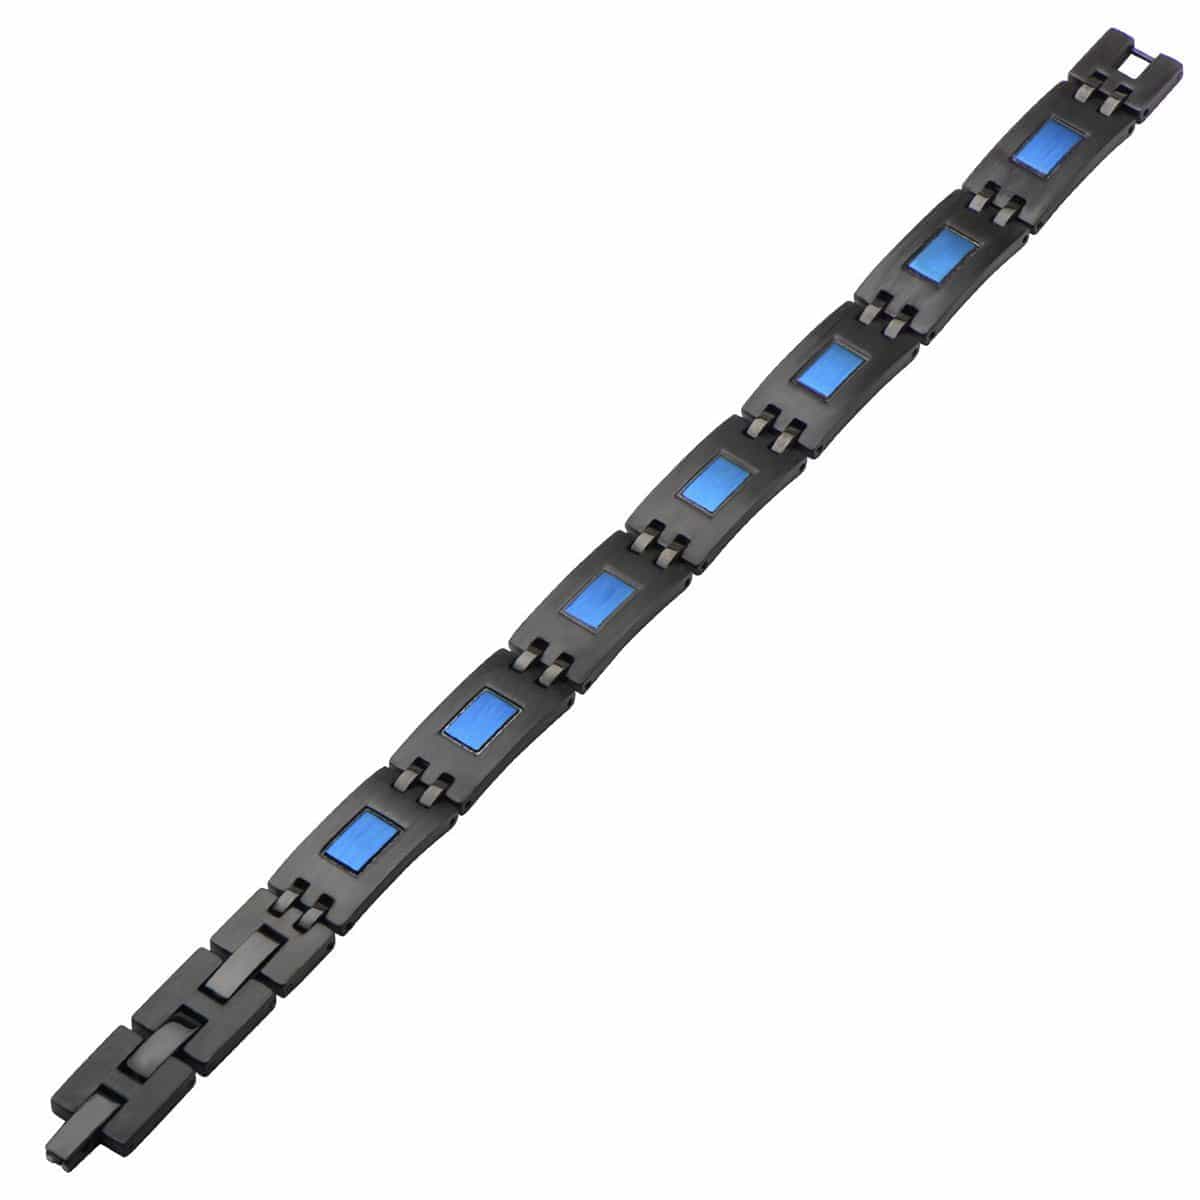 INOX JEWELRY Bracelets Blue and Black Stainless Steel Bold Rectangle Link Bracelet BR16669